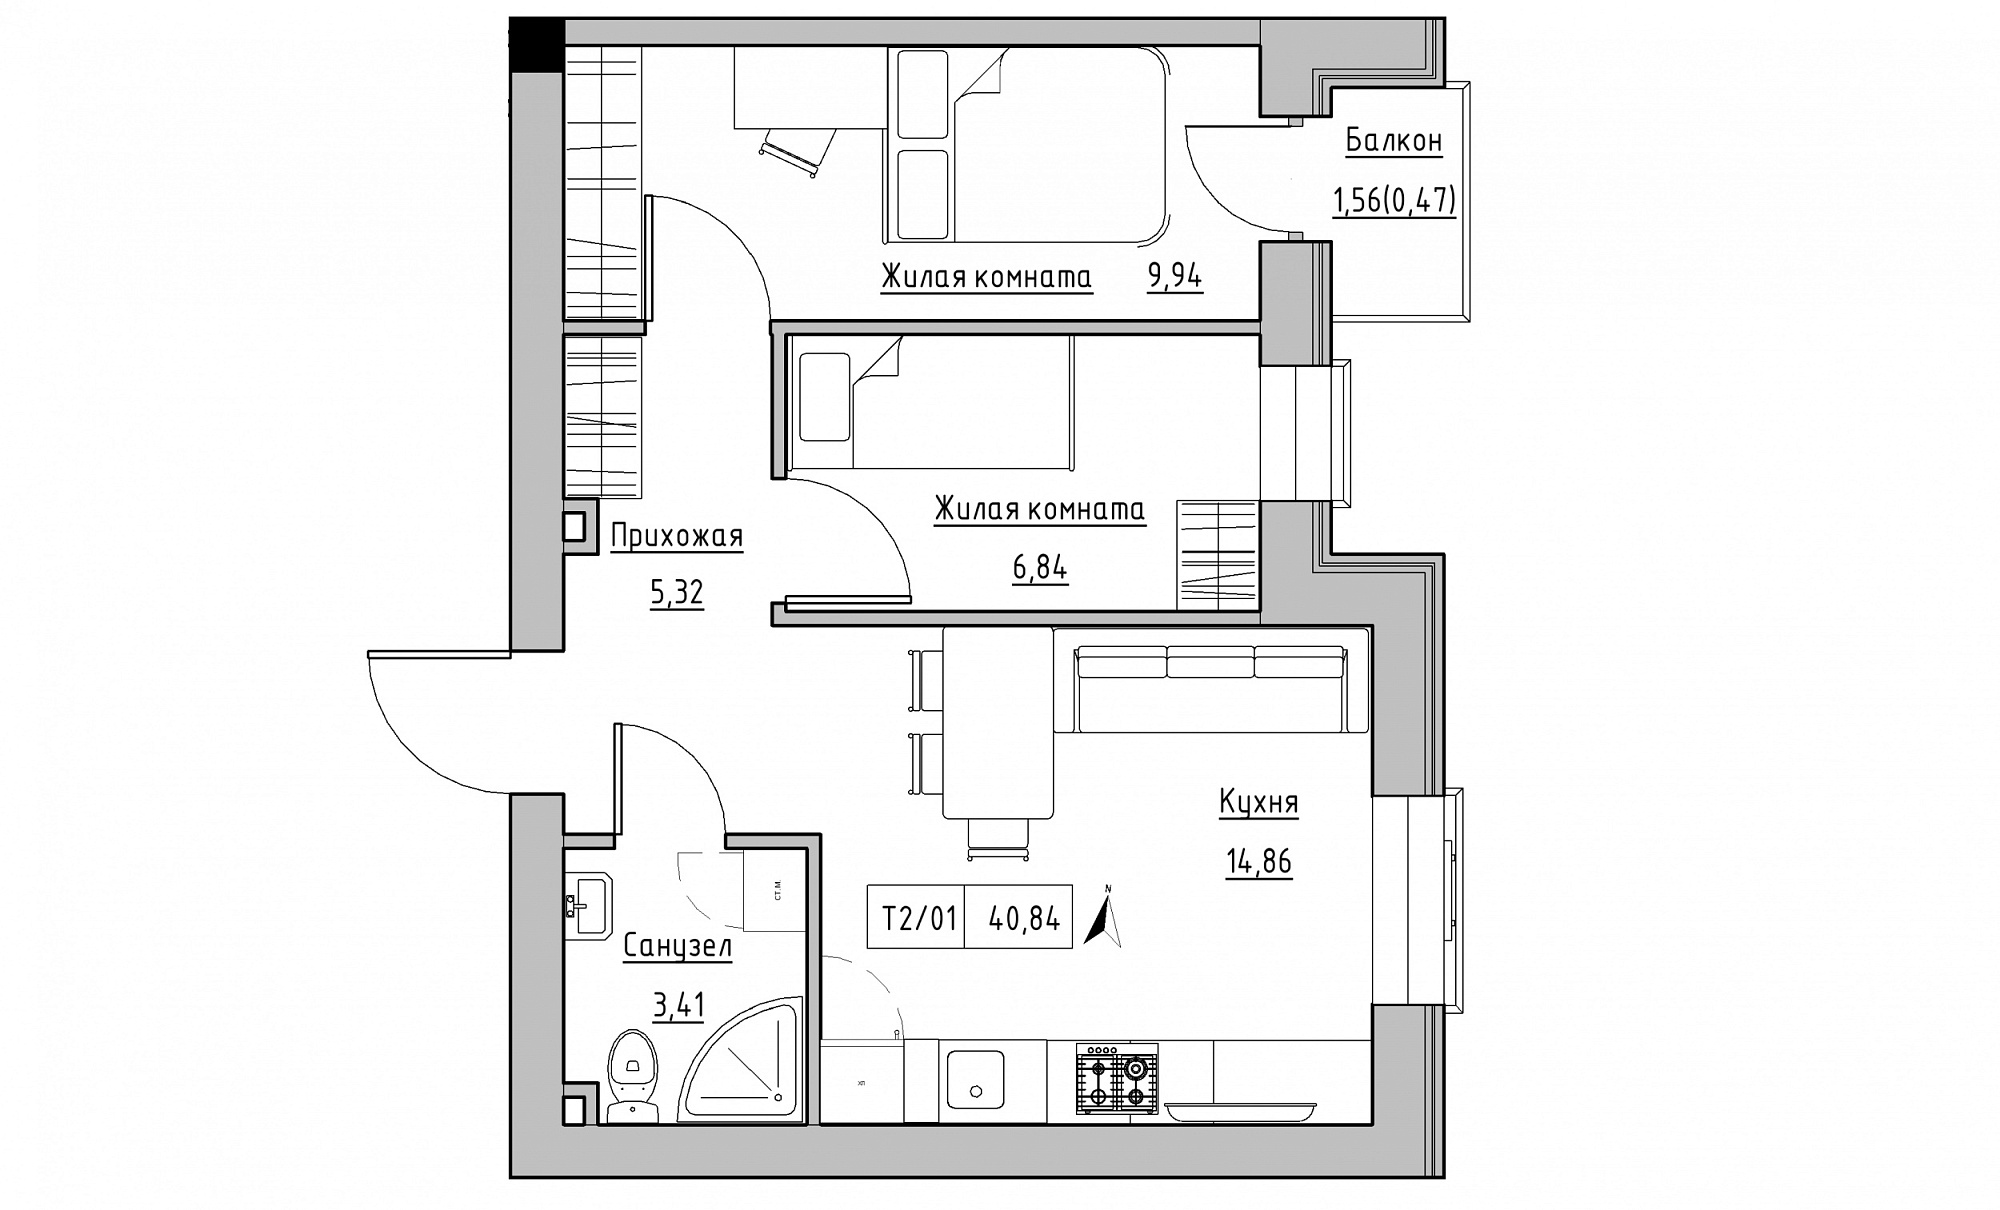 Planning 2-rm flats area 40.84m2, KS-015-02/0006.